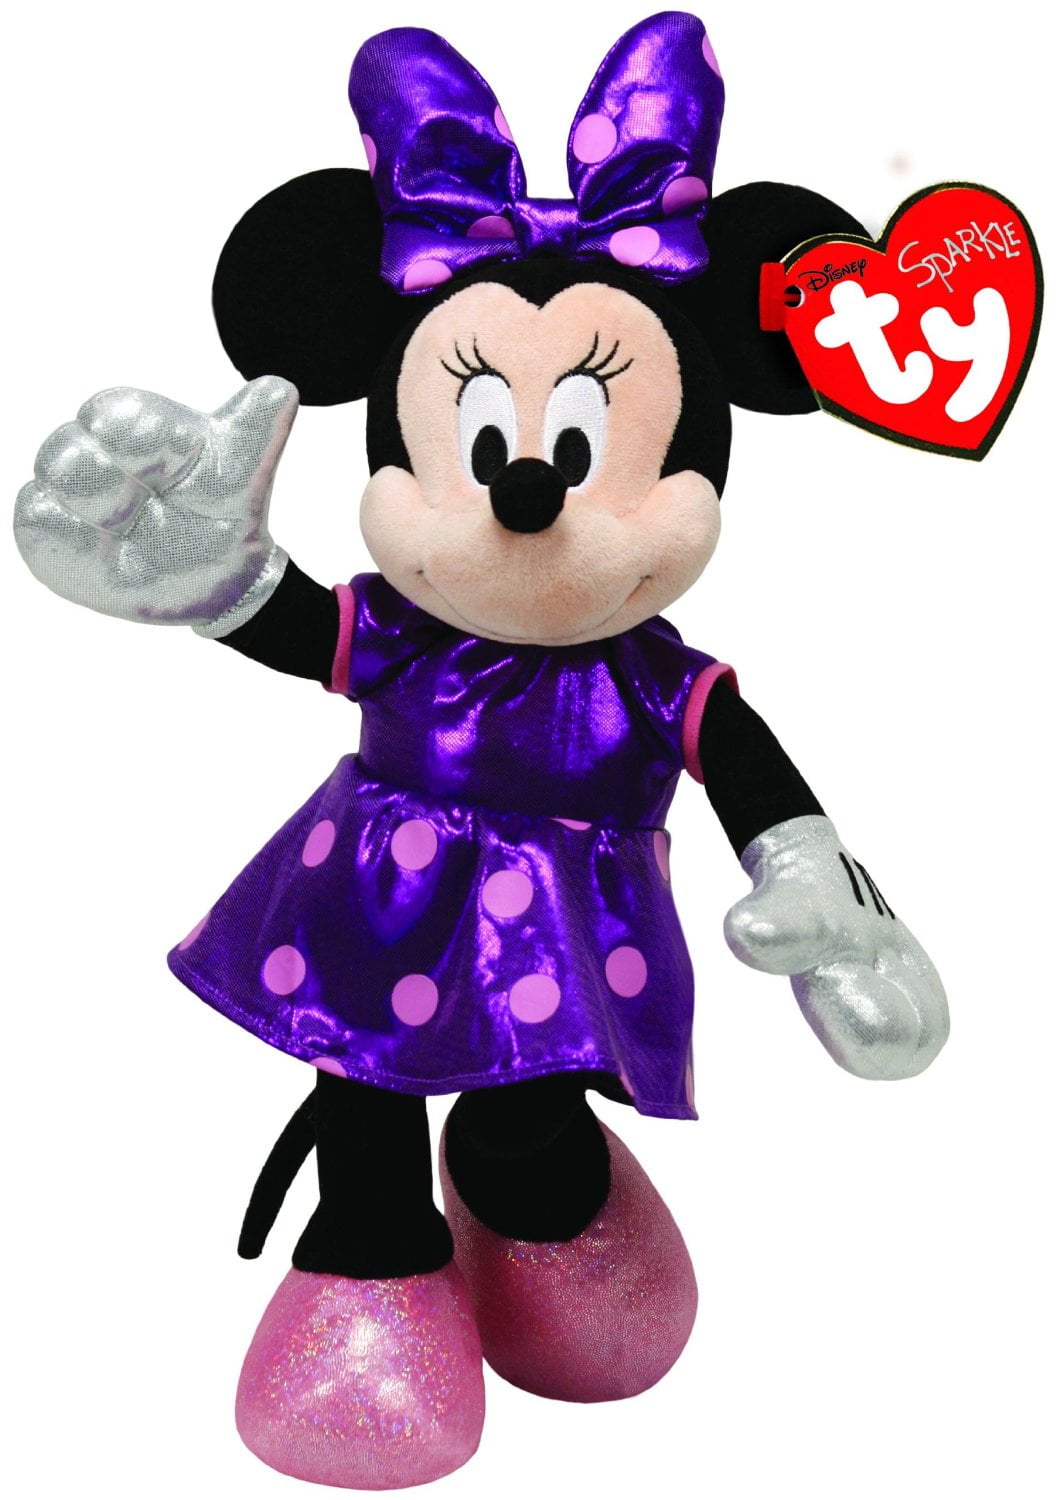 Stuffed Animal Purple Dress 15 Inch for sale online 2013 TY Disney Sparkle Minnie Mouse Plush 